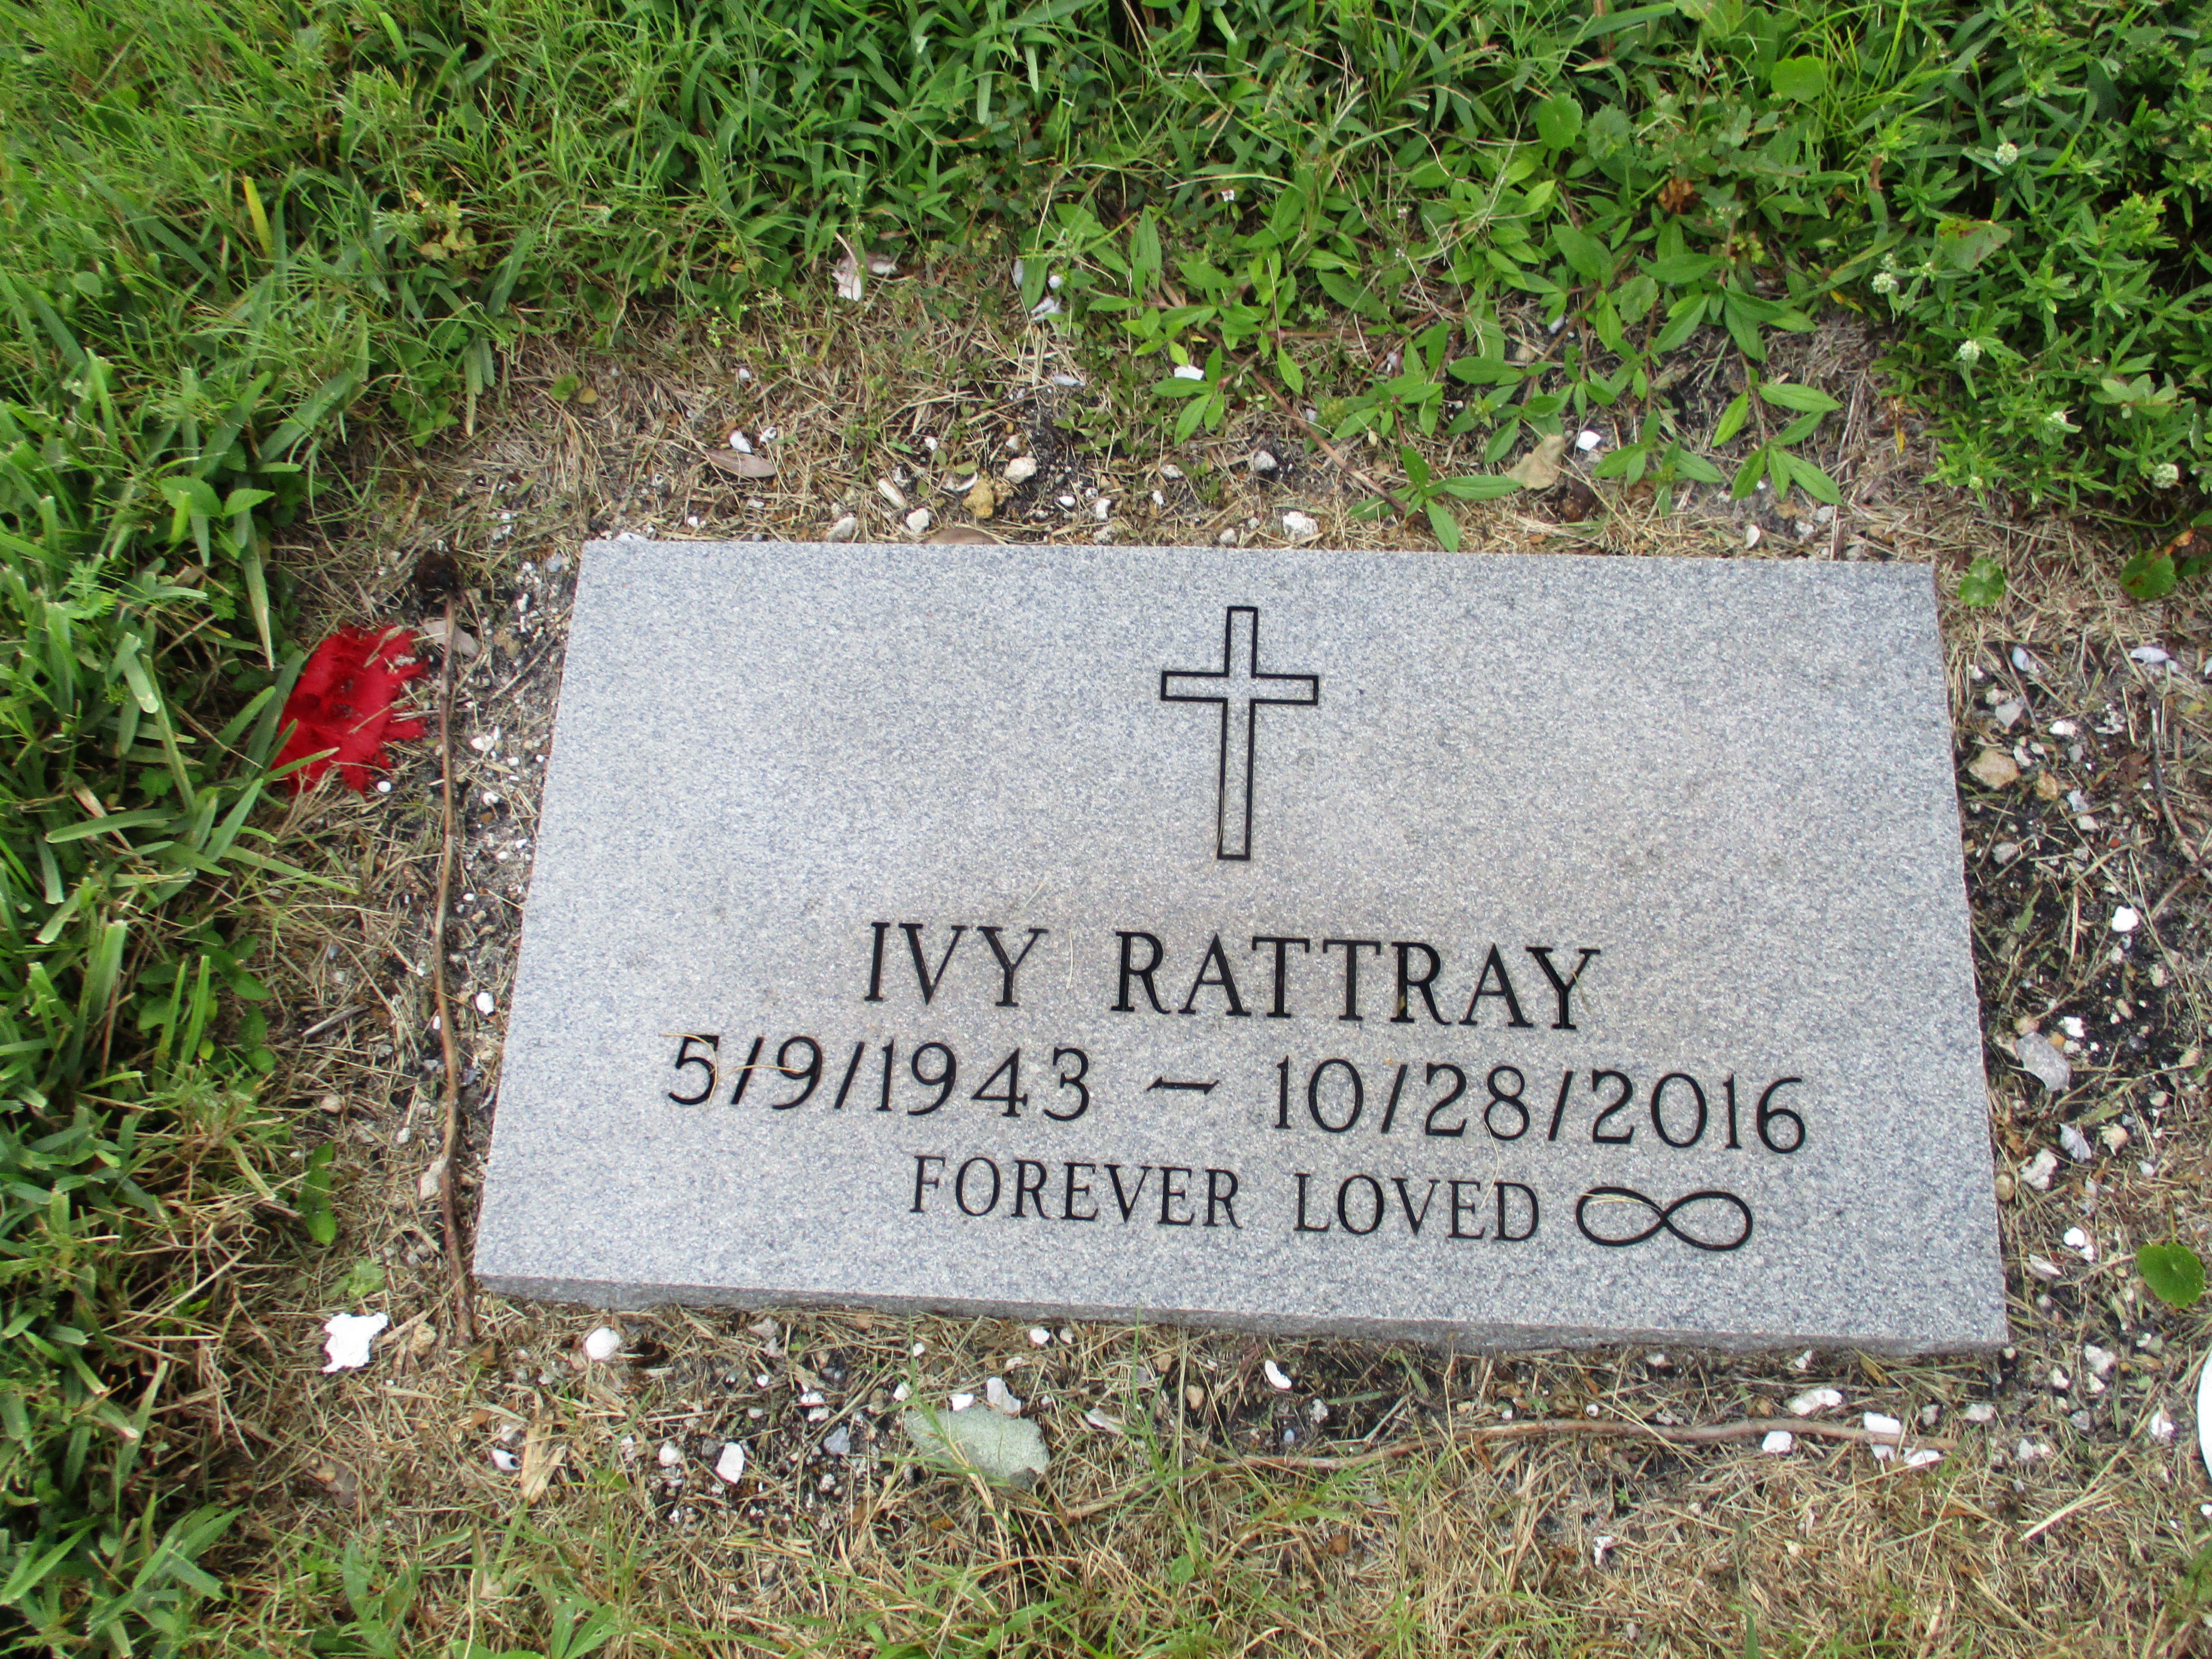 Ivy Rattray